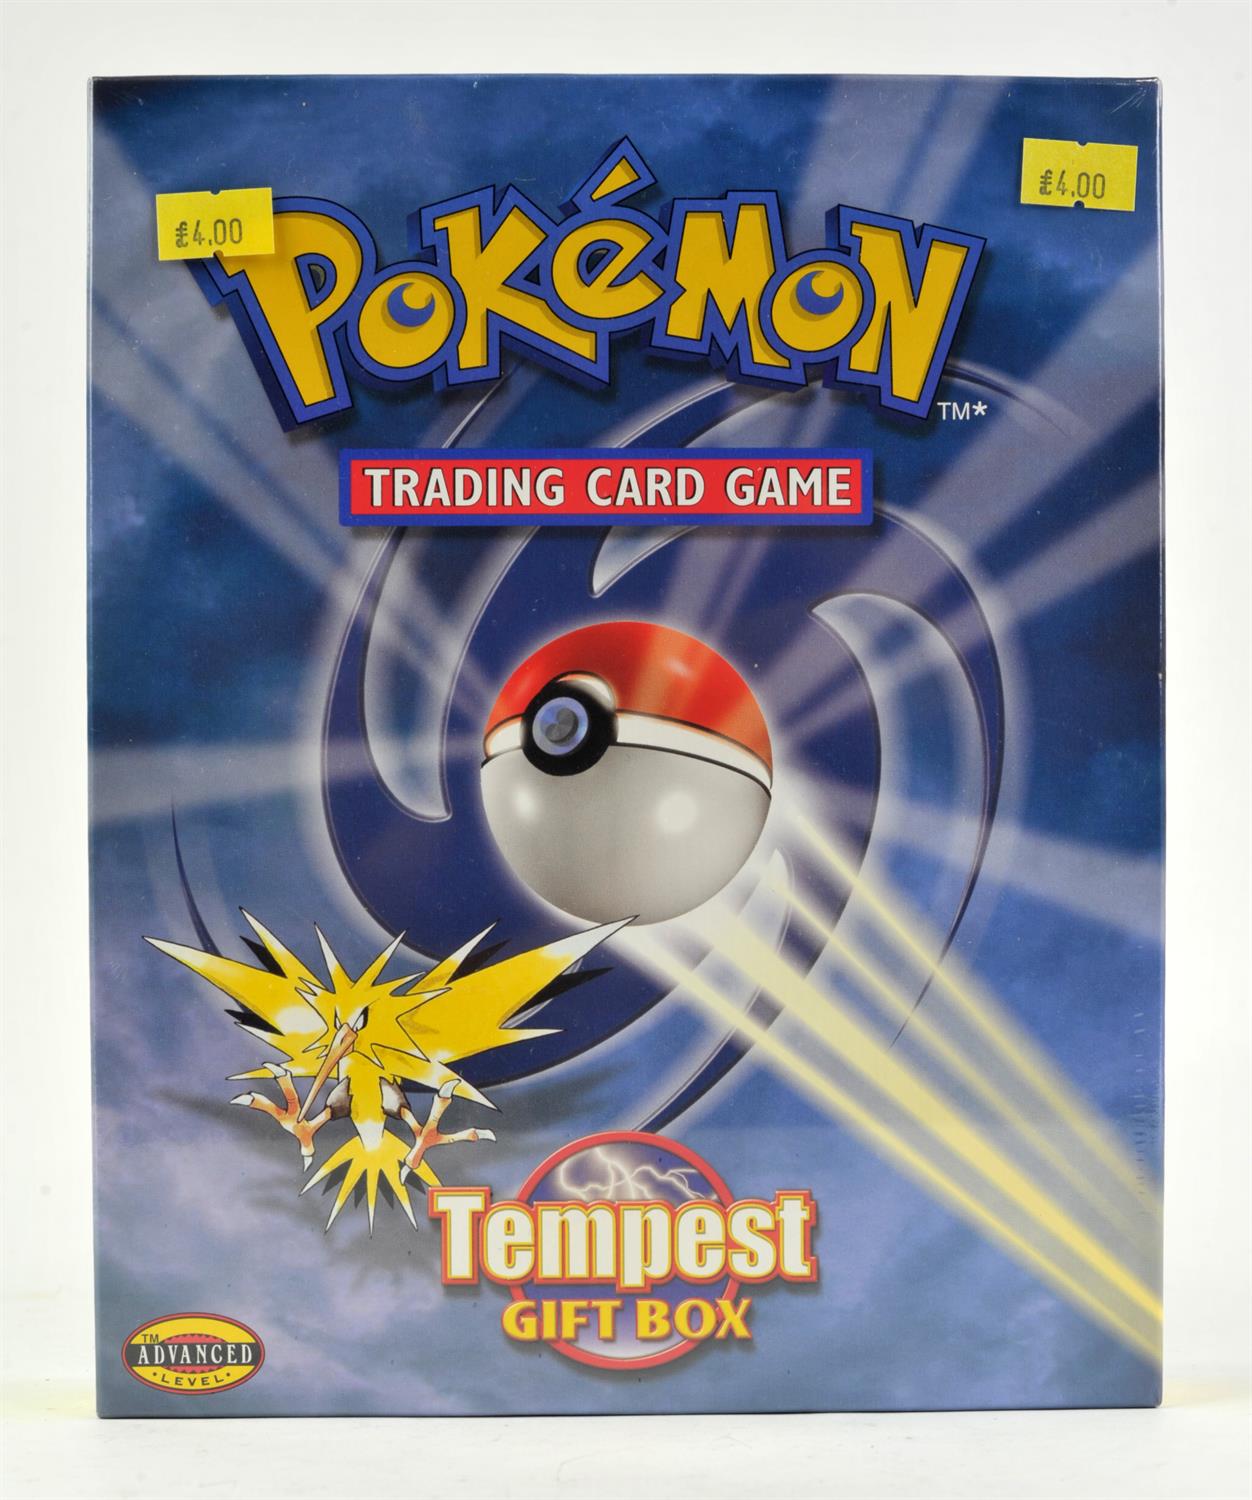 Pokémon TCG Sealed Tempest Gift Box. This lot contains a sealed Tempest Gift Box released early